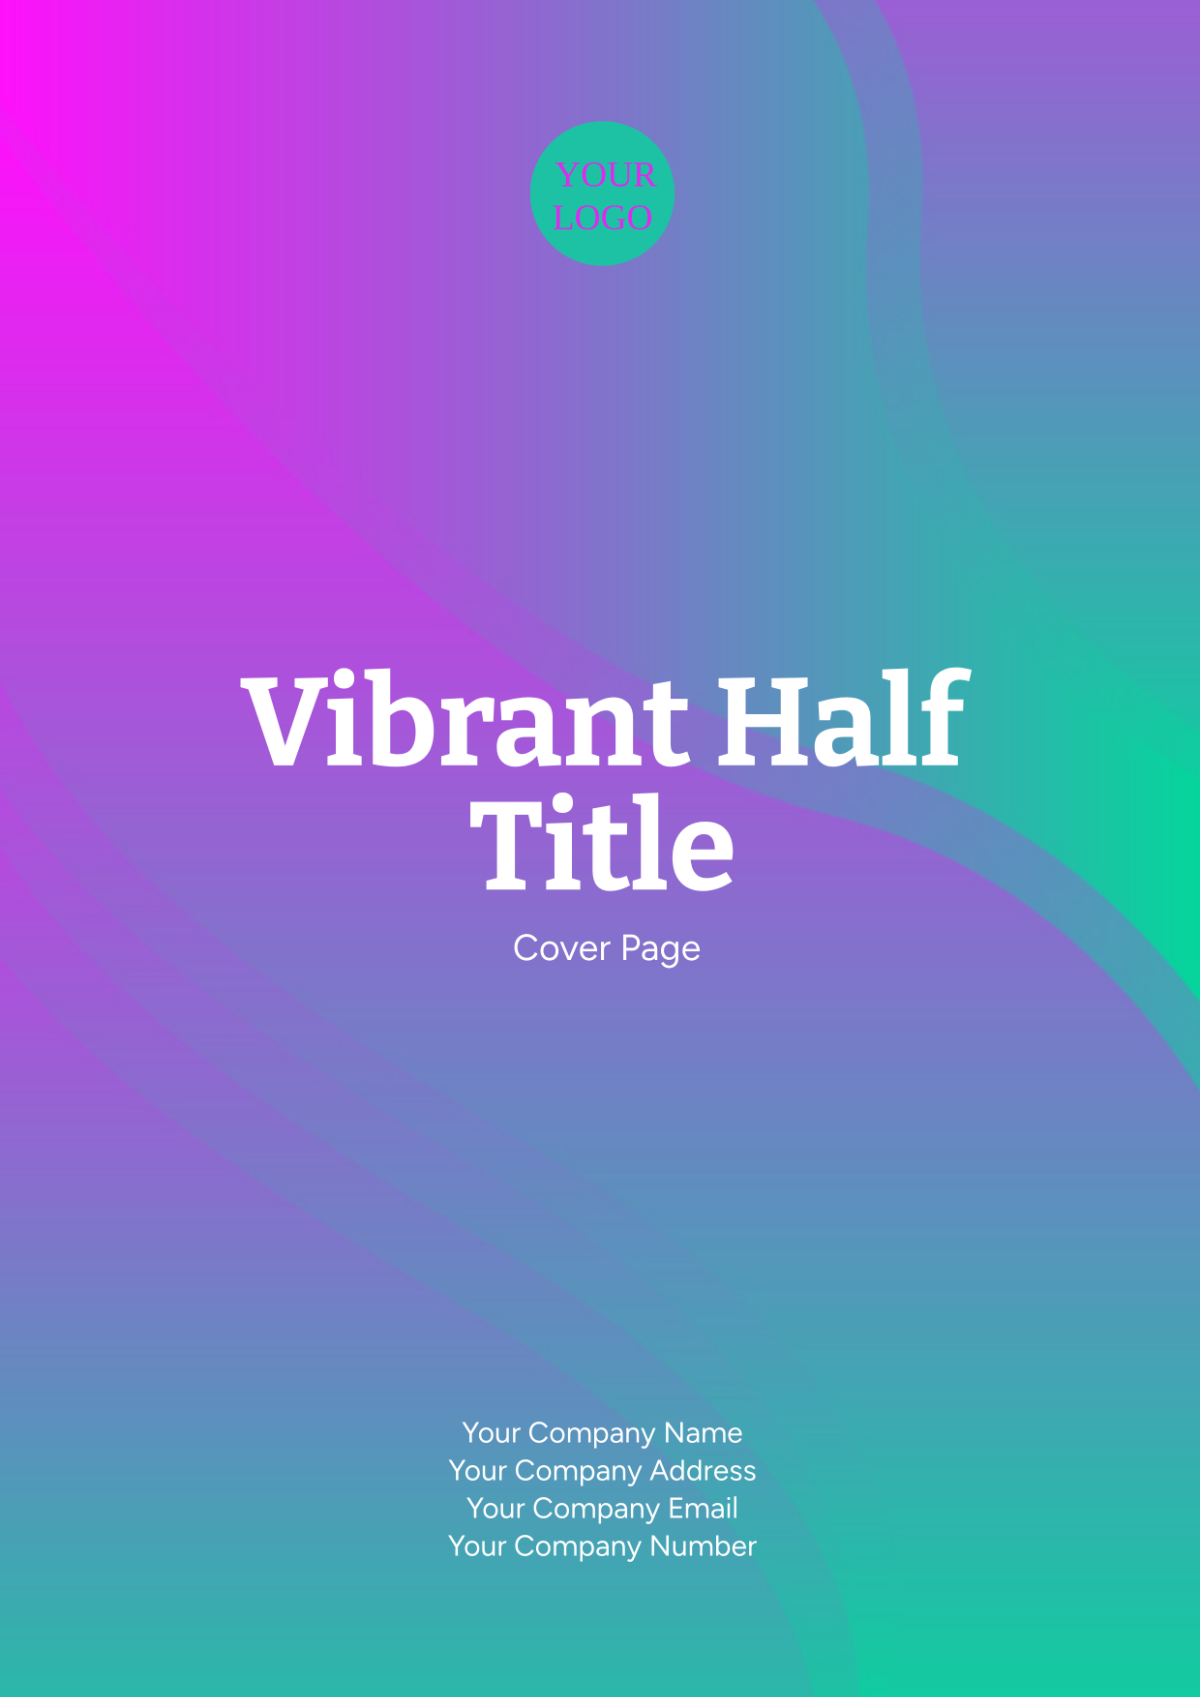 Vibrant Half Title Cover Page